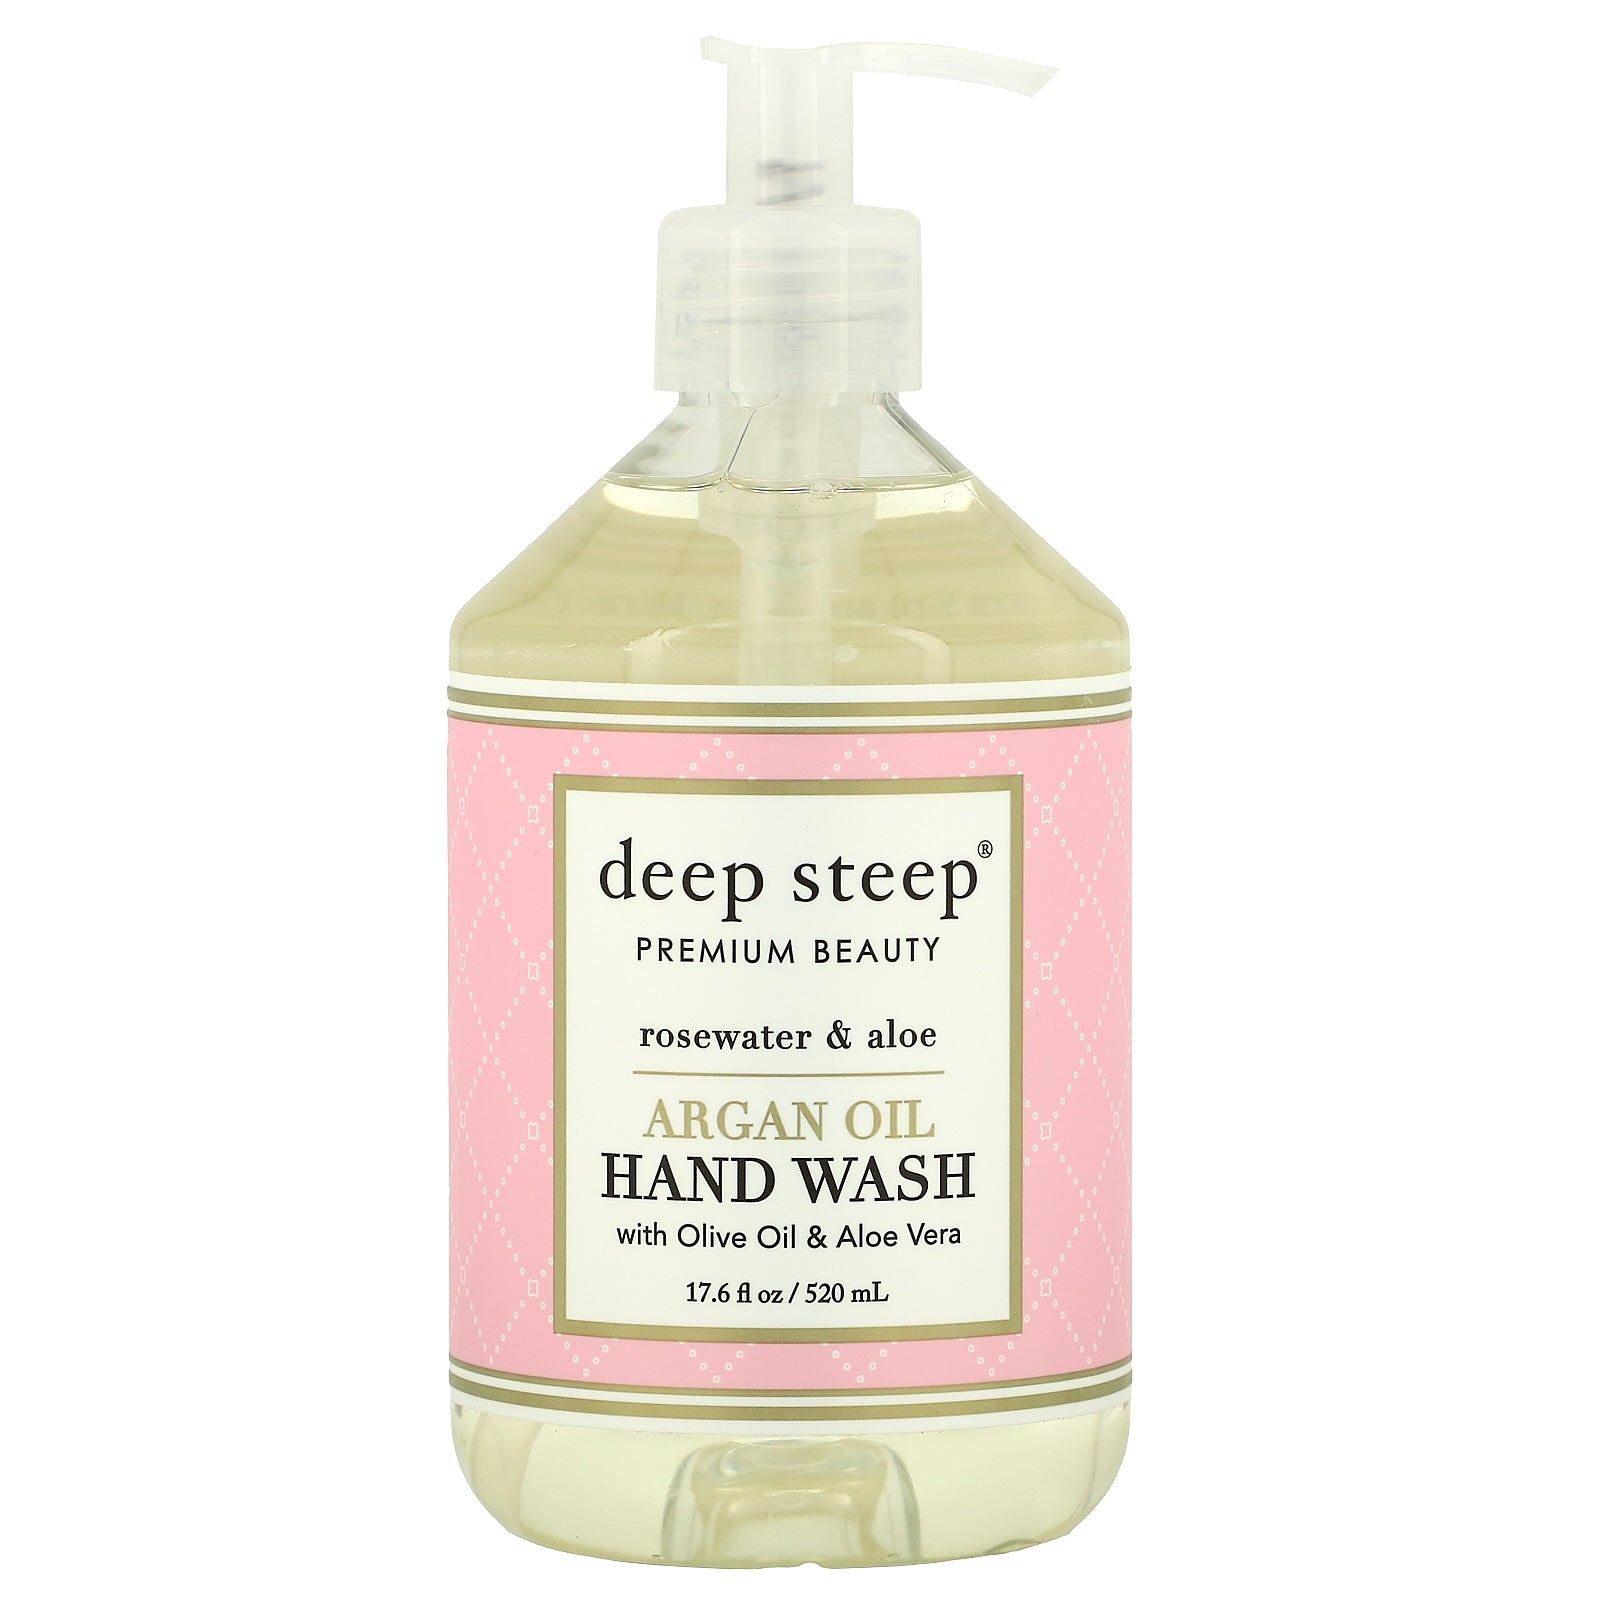 Deep Steep, Argan Oil Hand Wash, Rosewater & Aloe, 17.6 fl oz (520 ml)